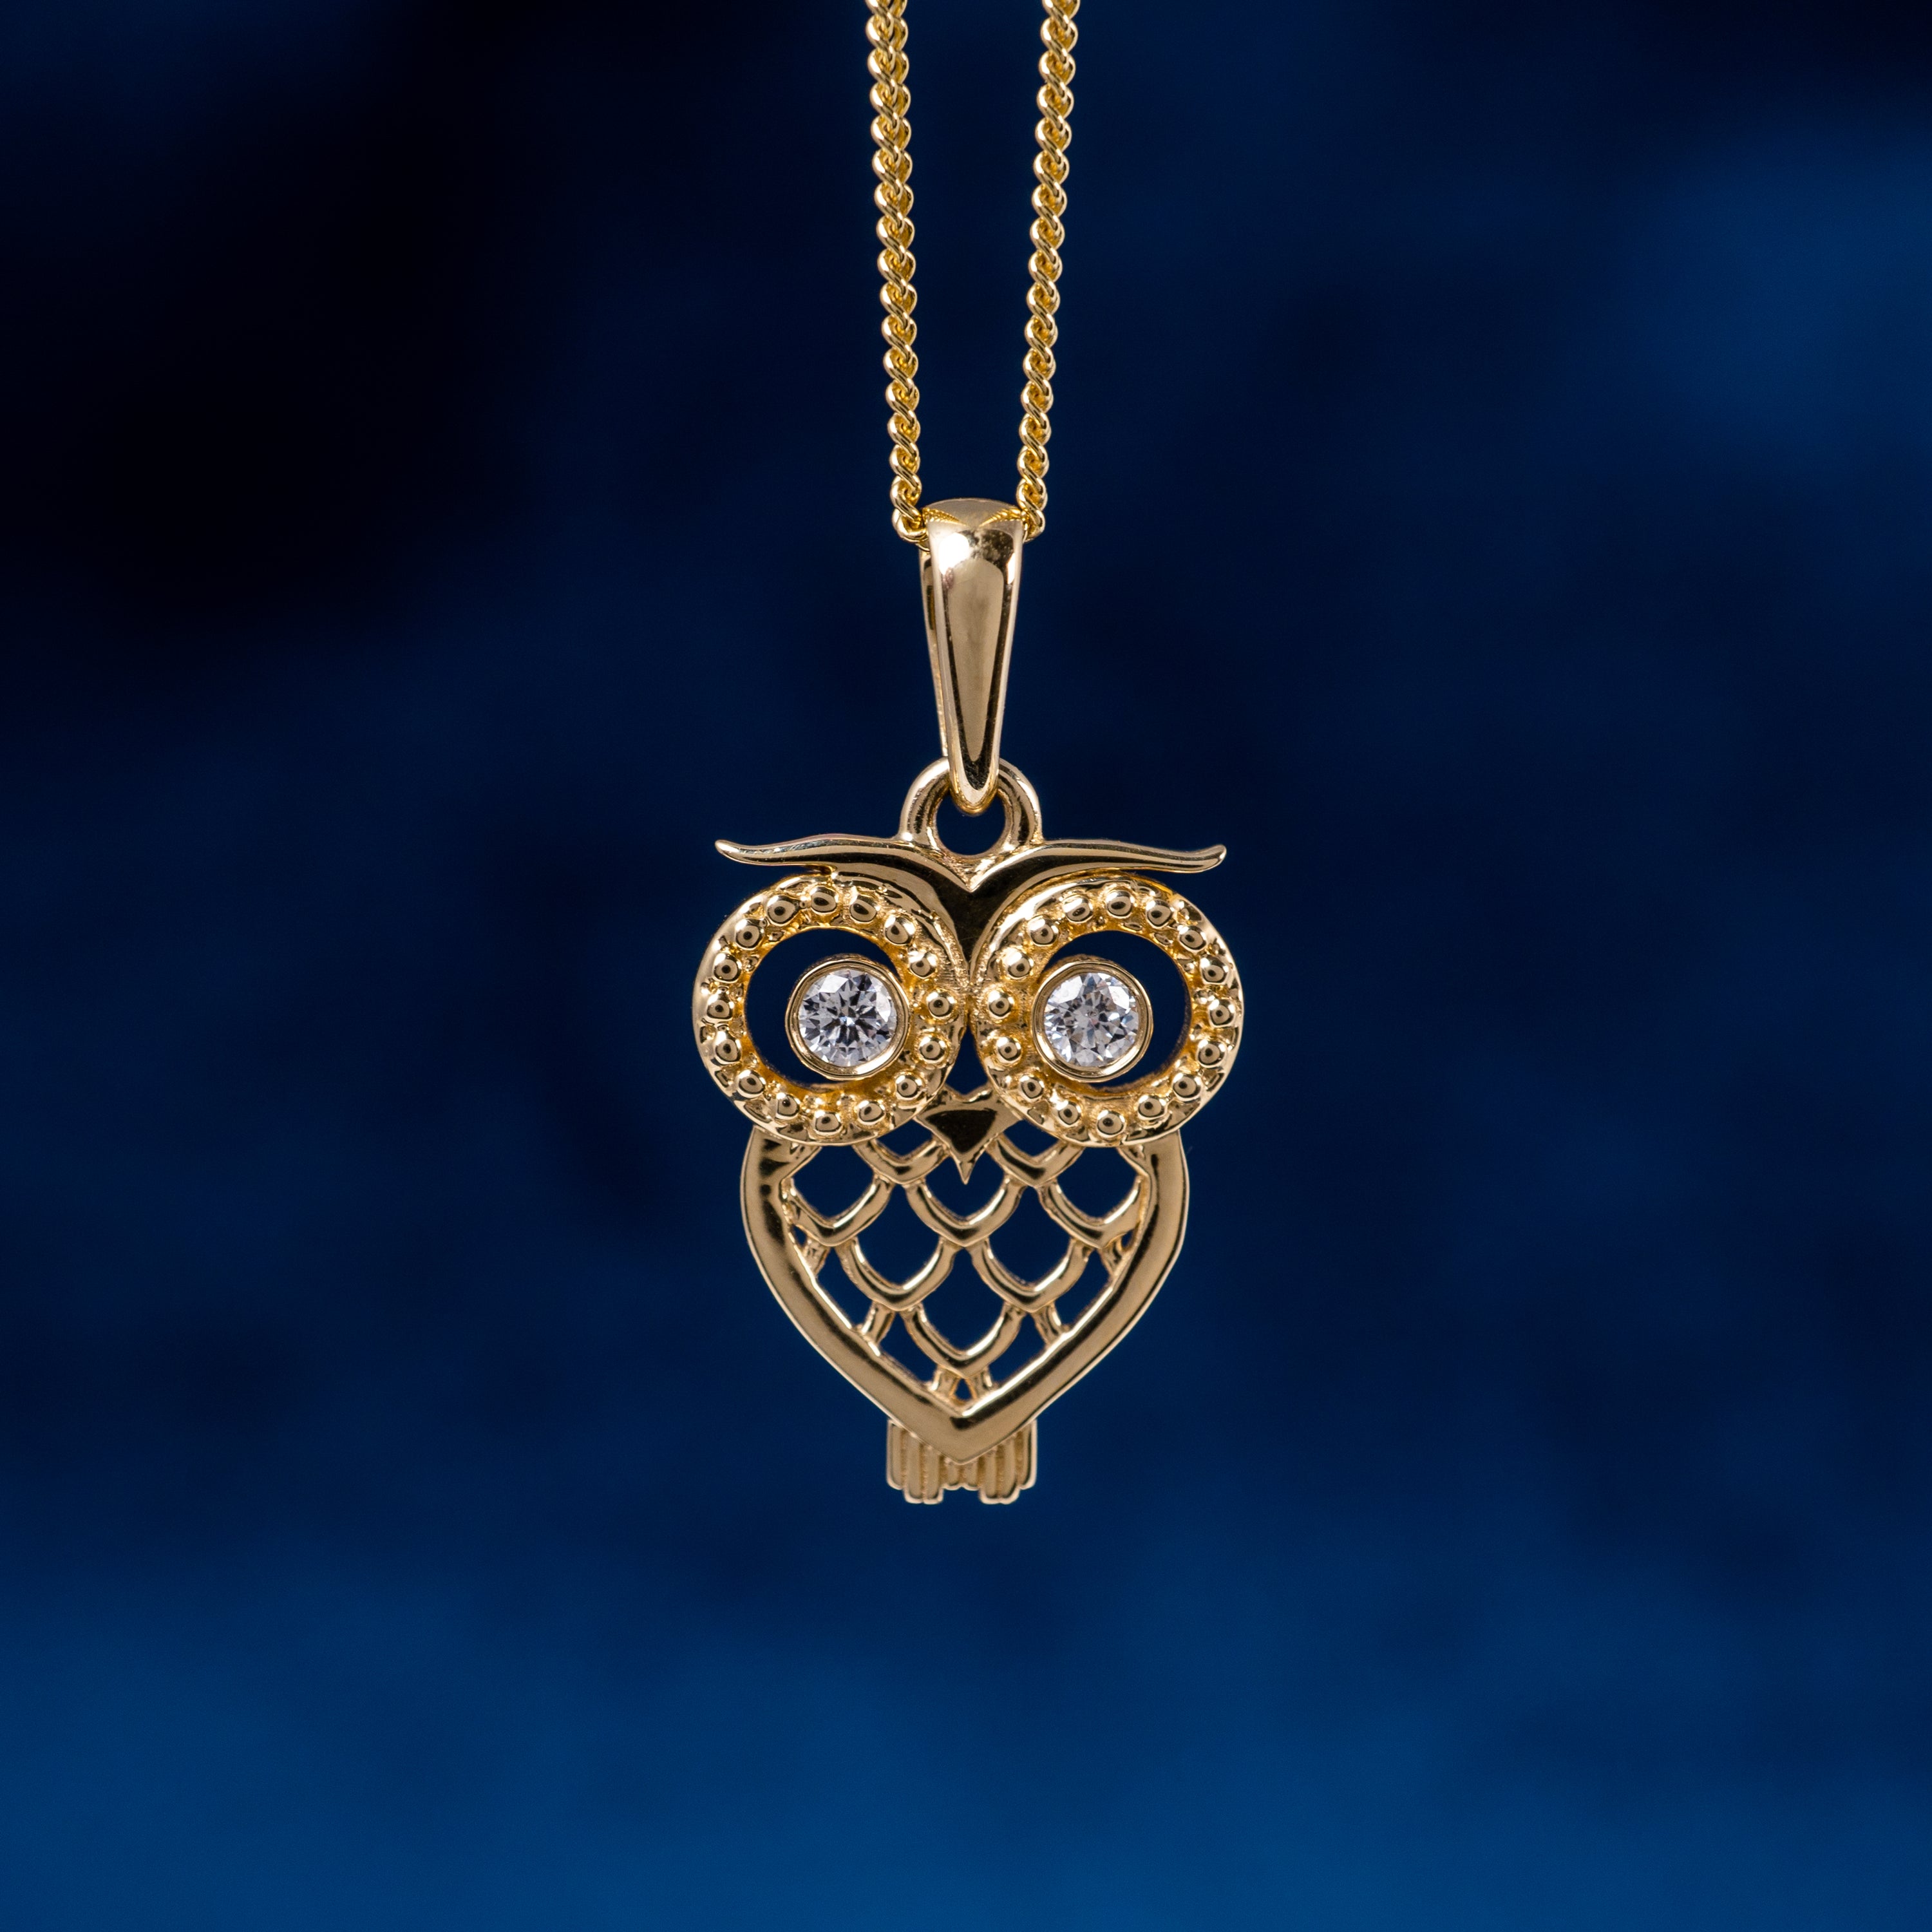 Gold owl pendant with diamond eyes 